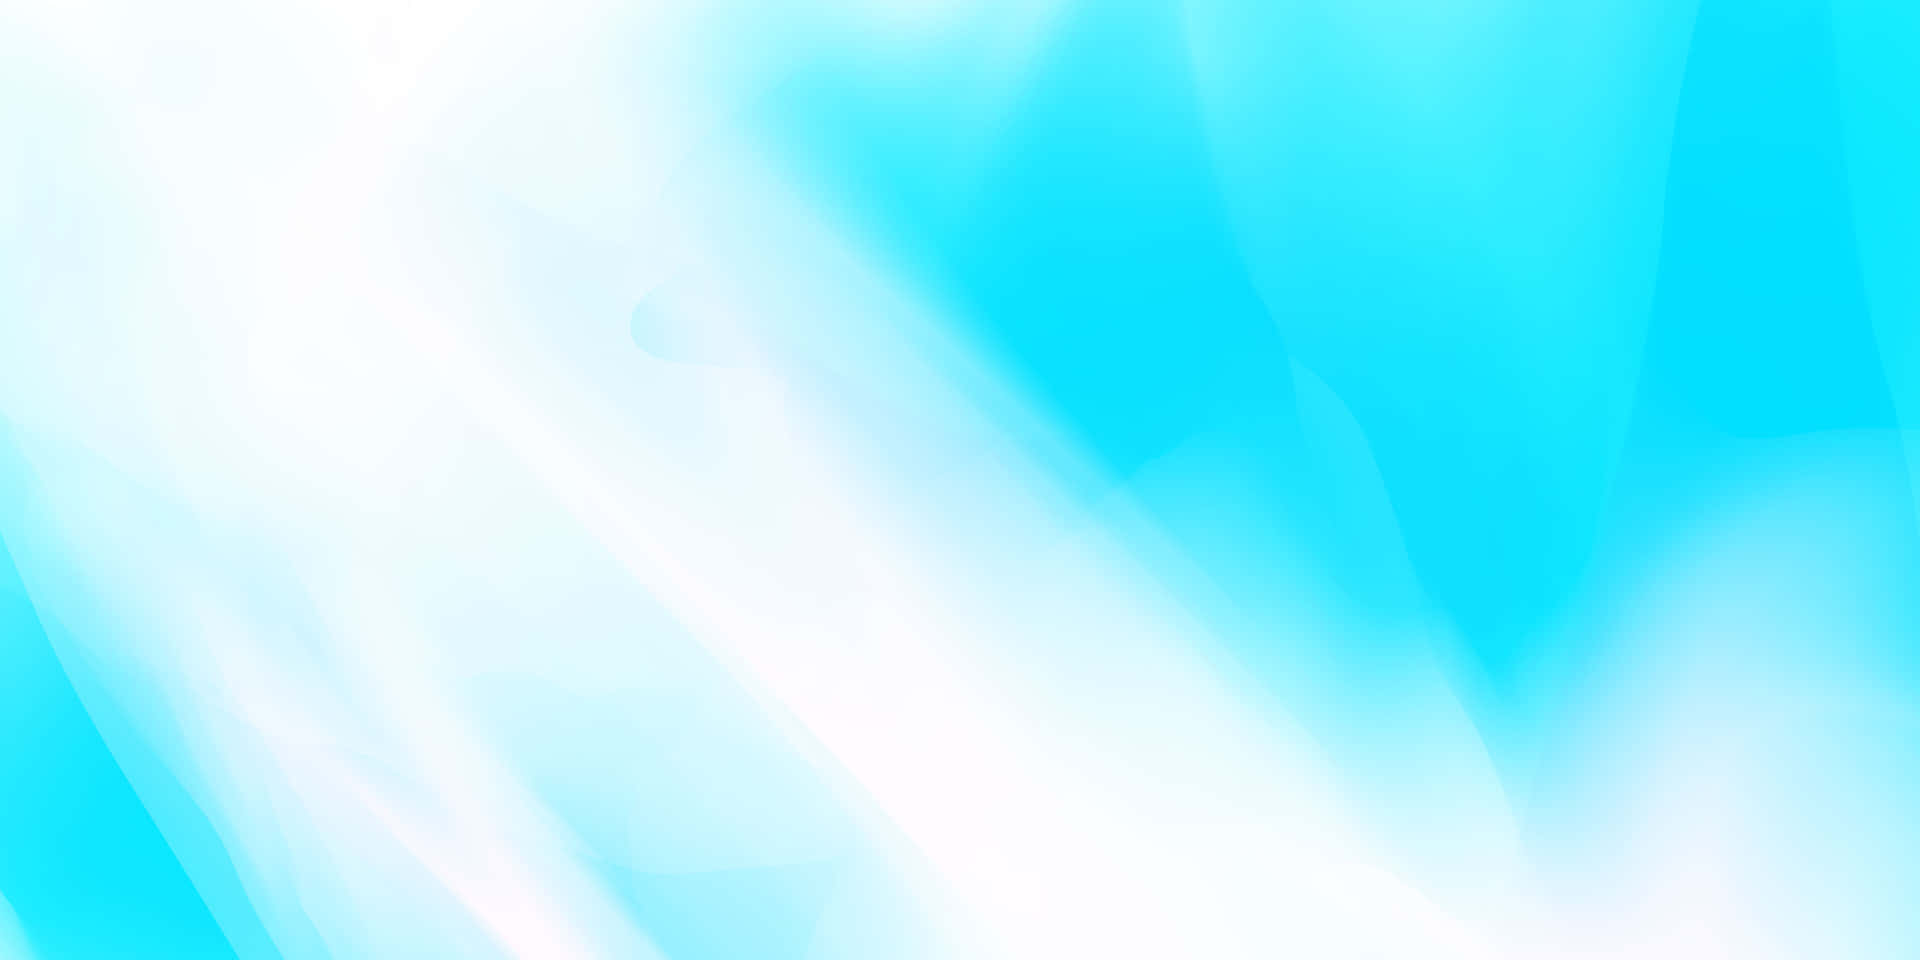 Refreshing pastel blue background